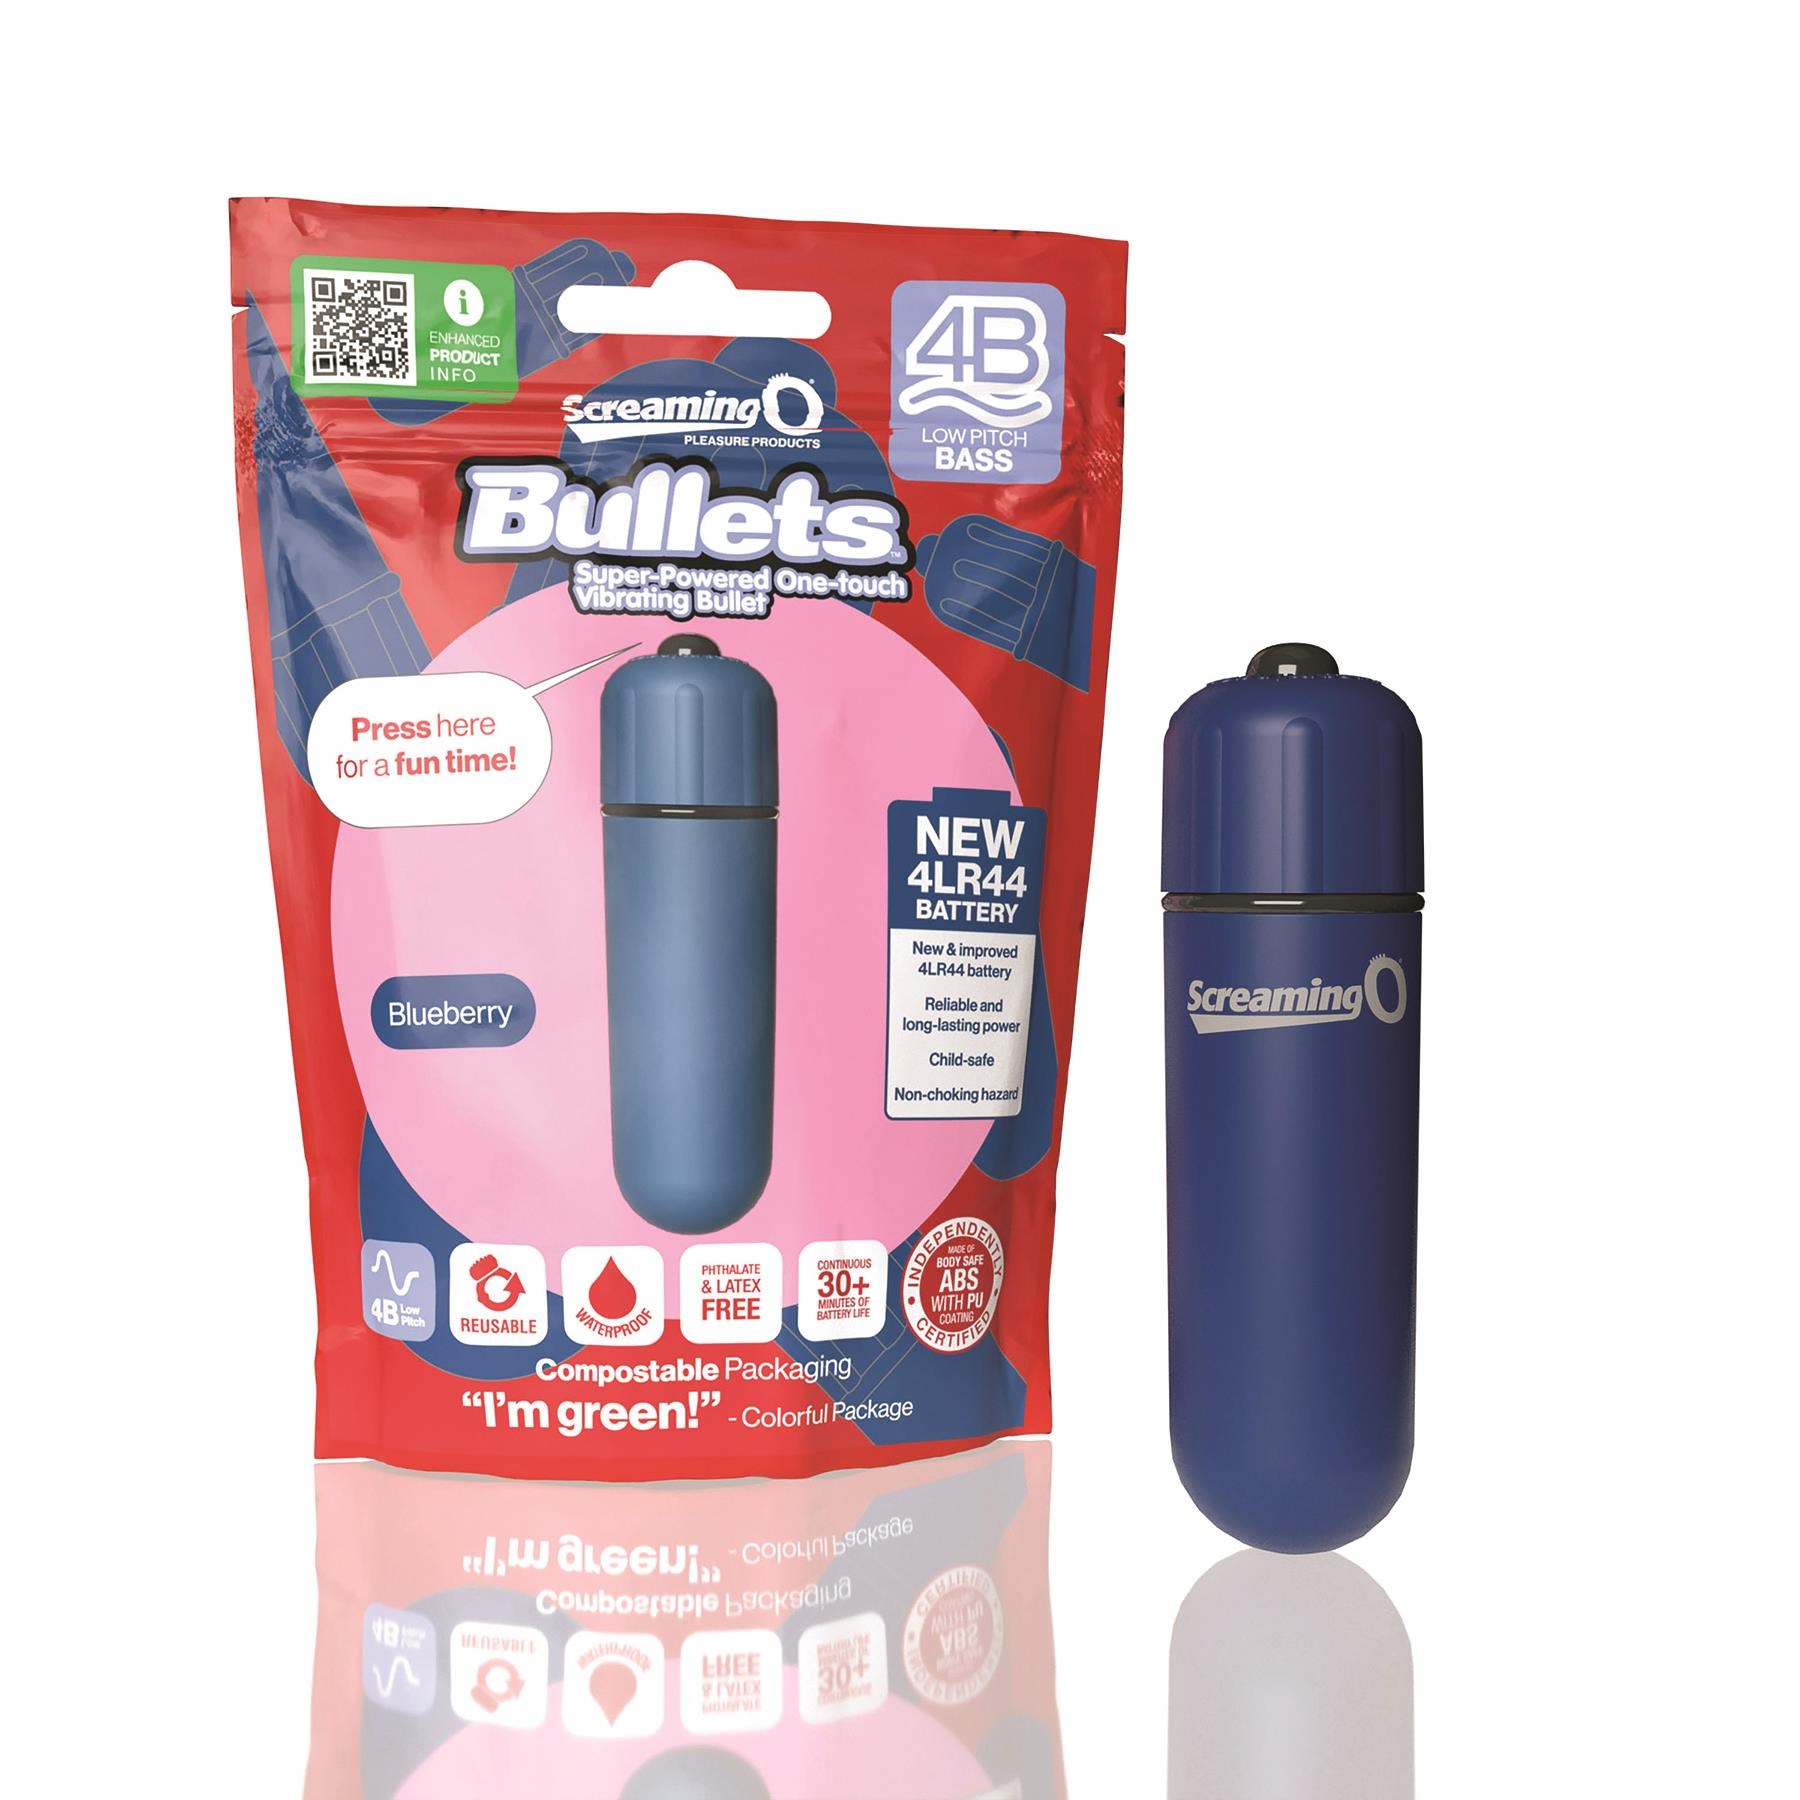 Screaming O 4B Rumble Bullet - Product and Packaging - Dark Blue